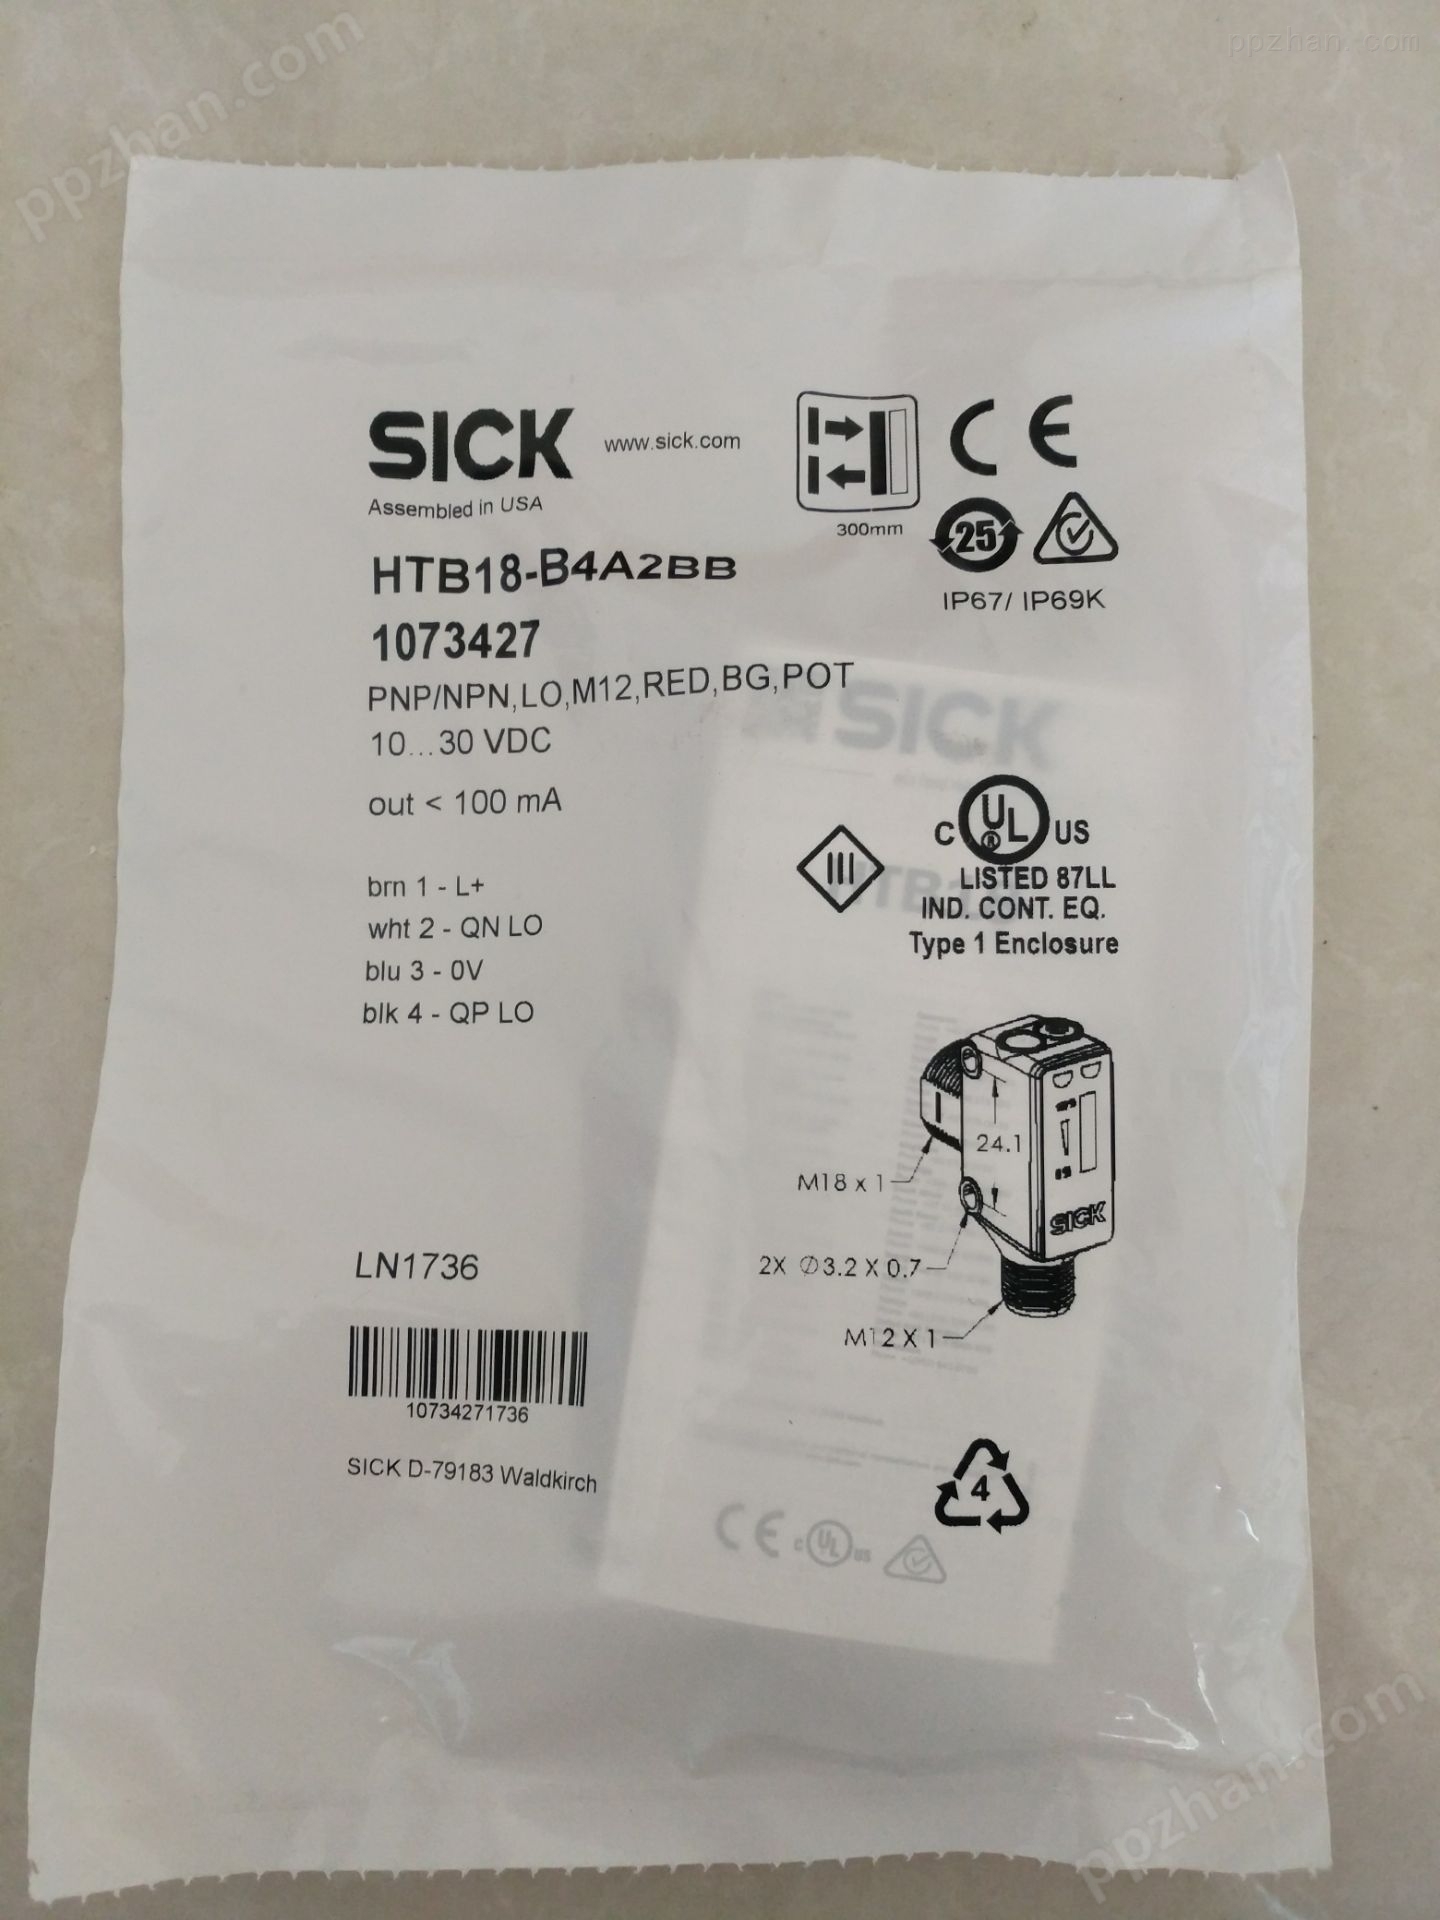 sick光电传感器HTB18-B4A2BB